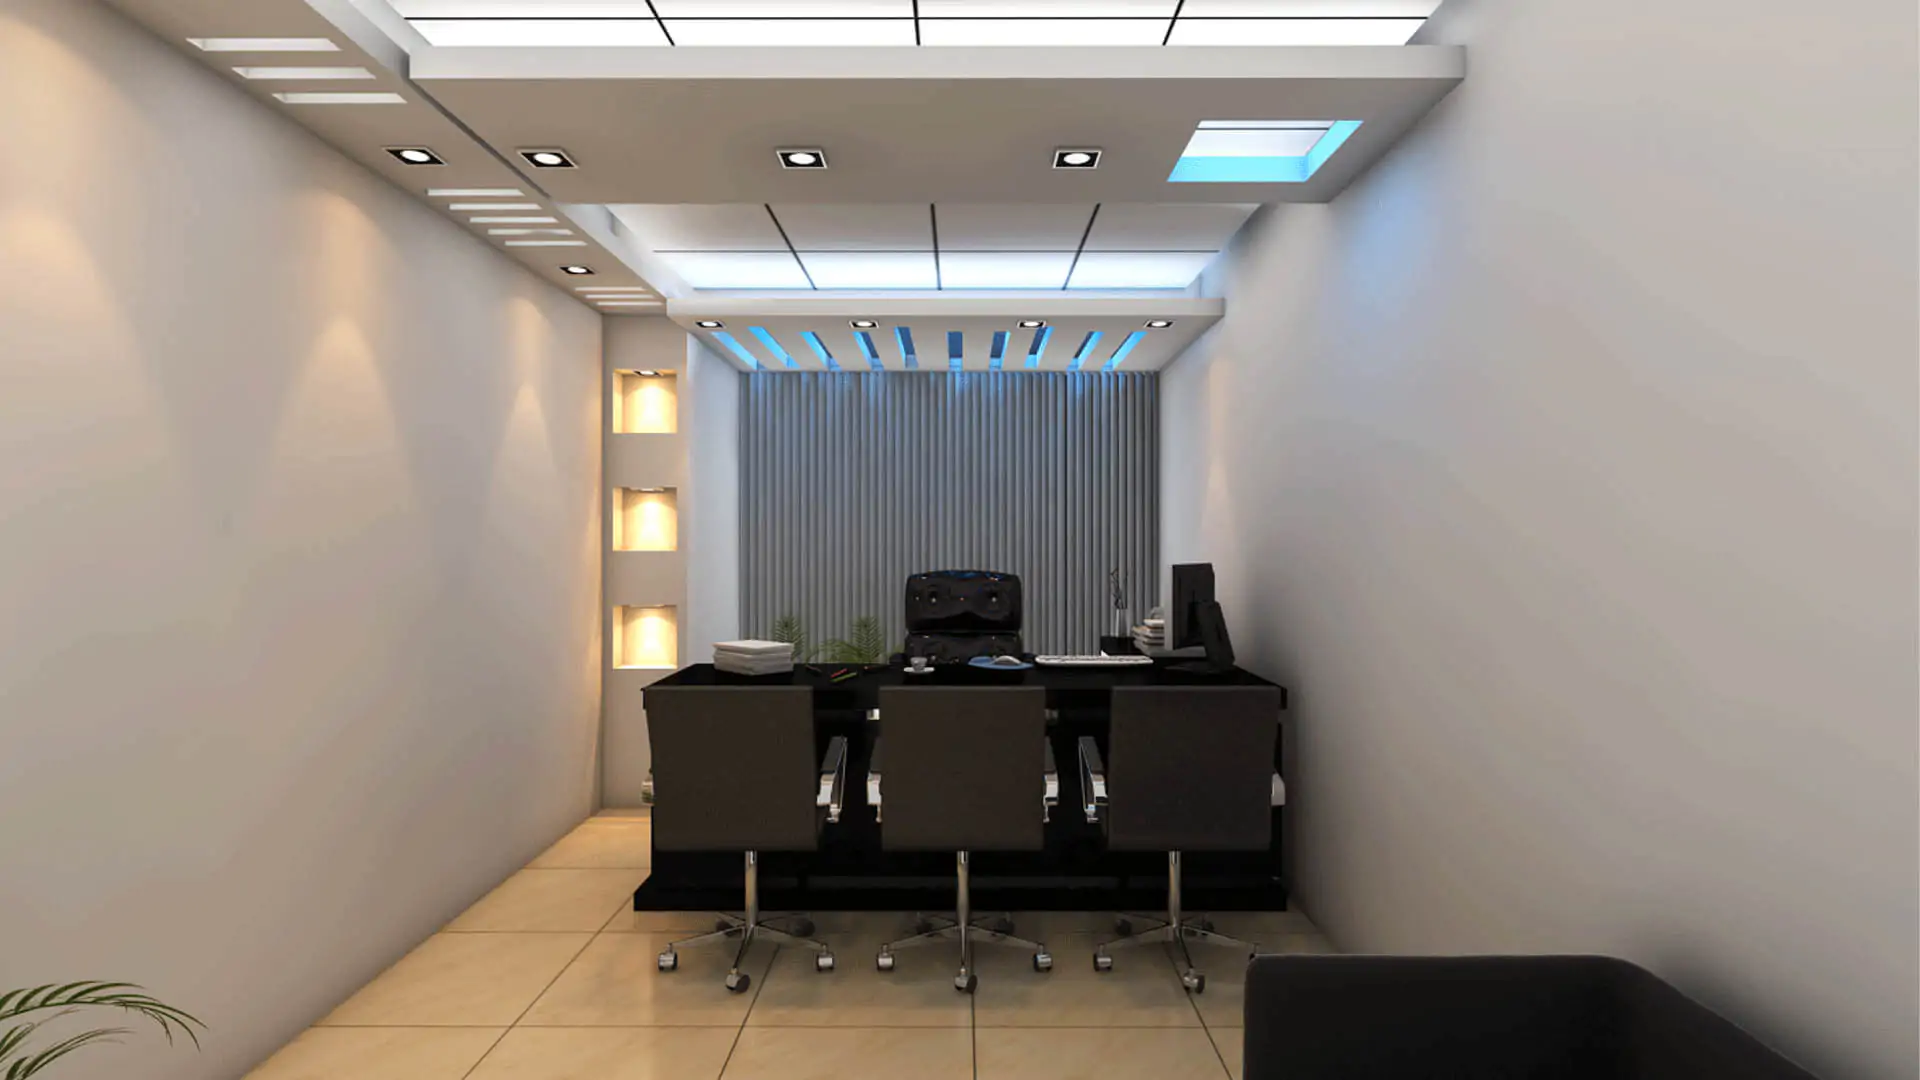 Manager Minimalist Room Interior Design In Bangladesh